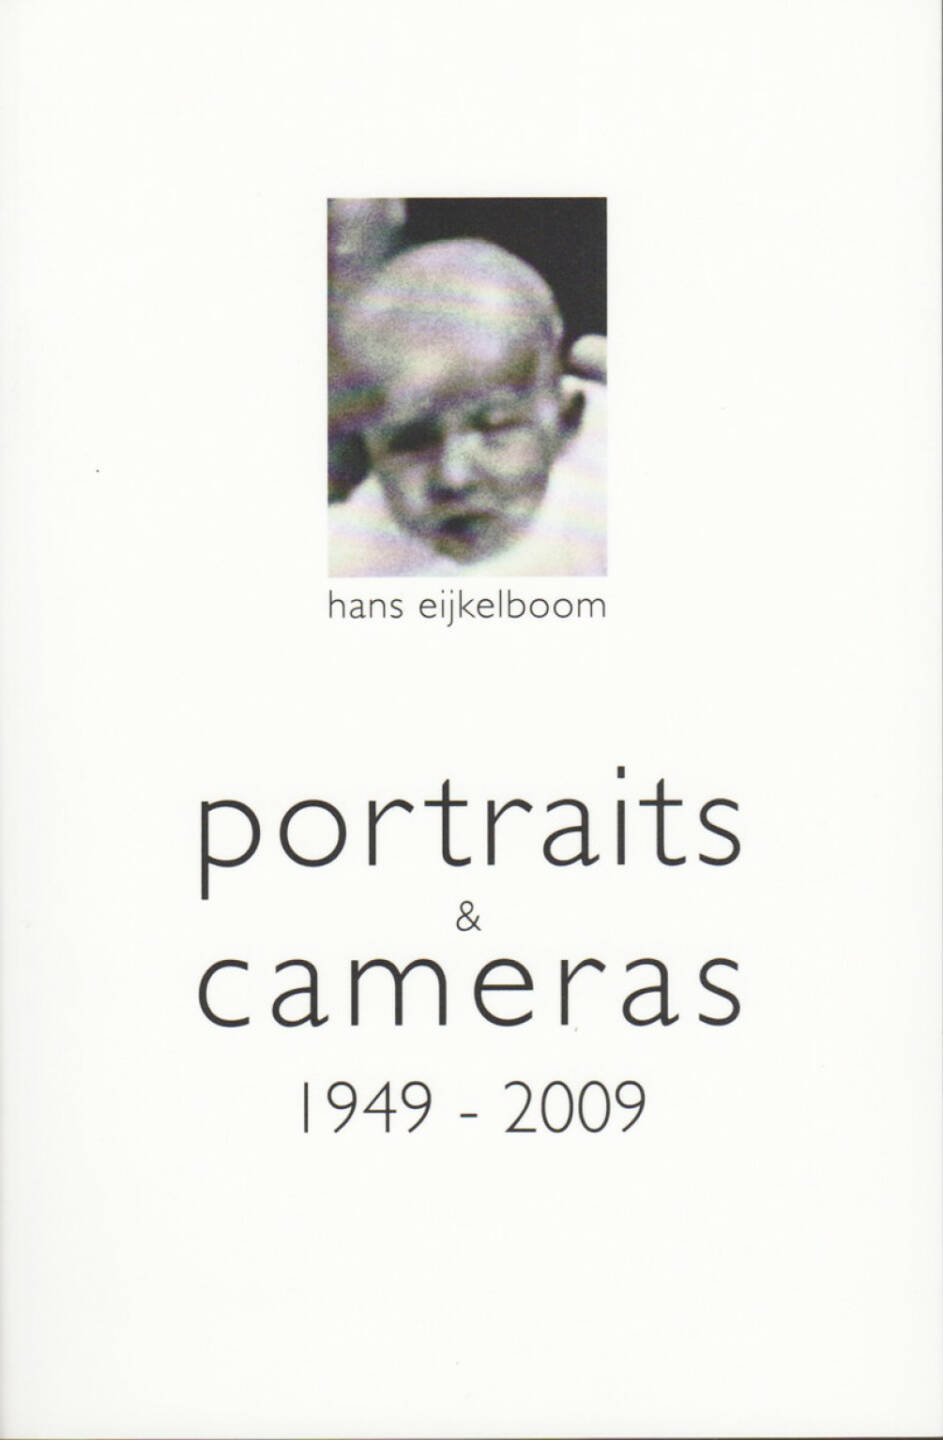 Hans Eijkelboom - Portraits and Cameras. 1949 - 2009, Self published 2009, Cover - http://www.josefchladek.com/book/hans_eijkelboom_-_portraits_and_cameras_1949_-_2009